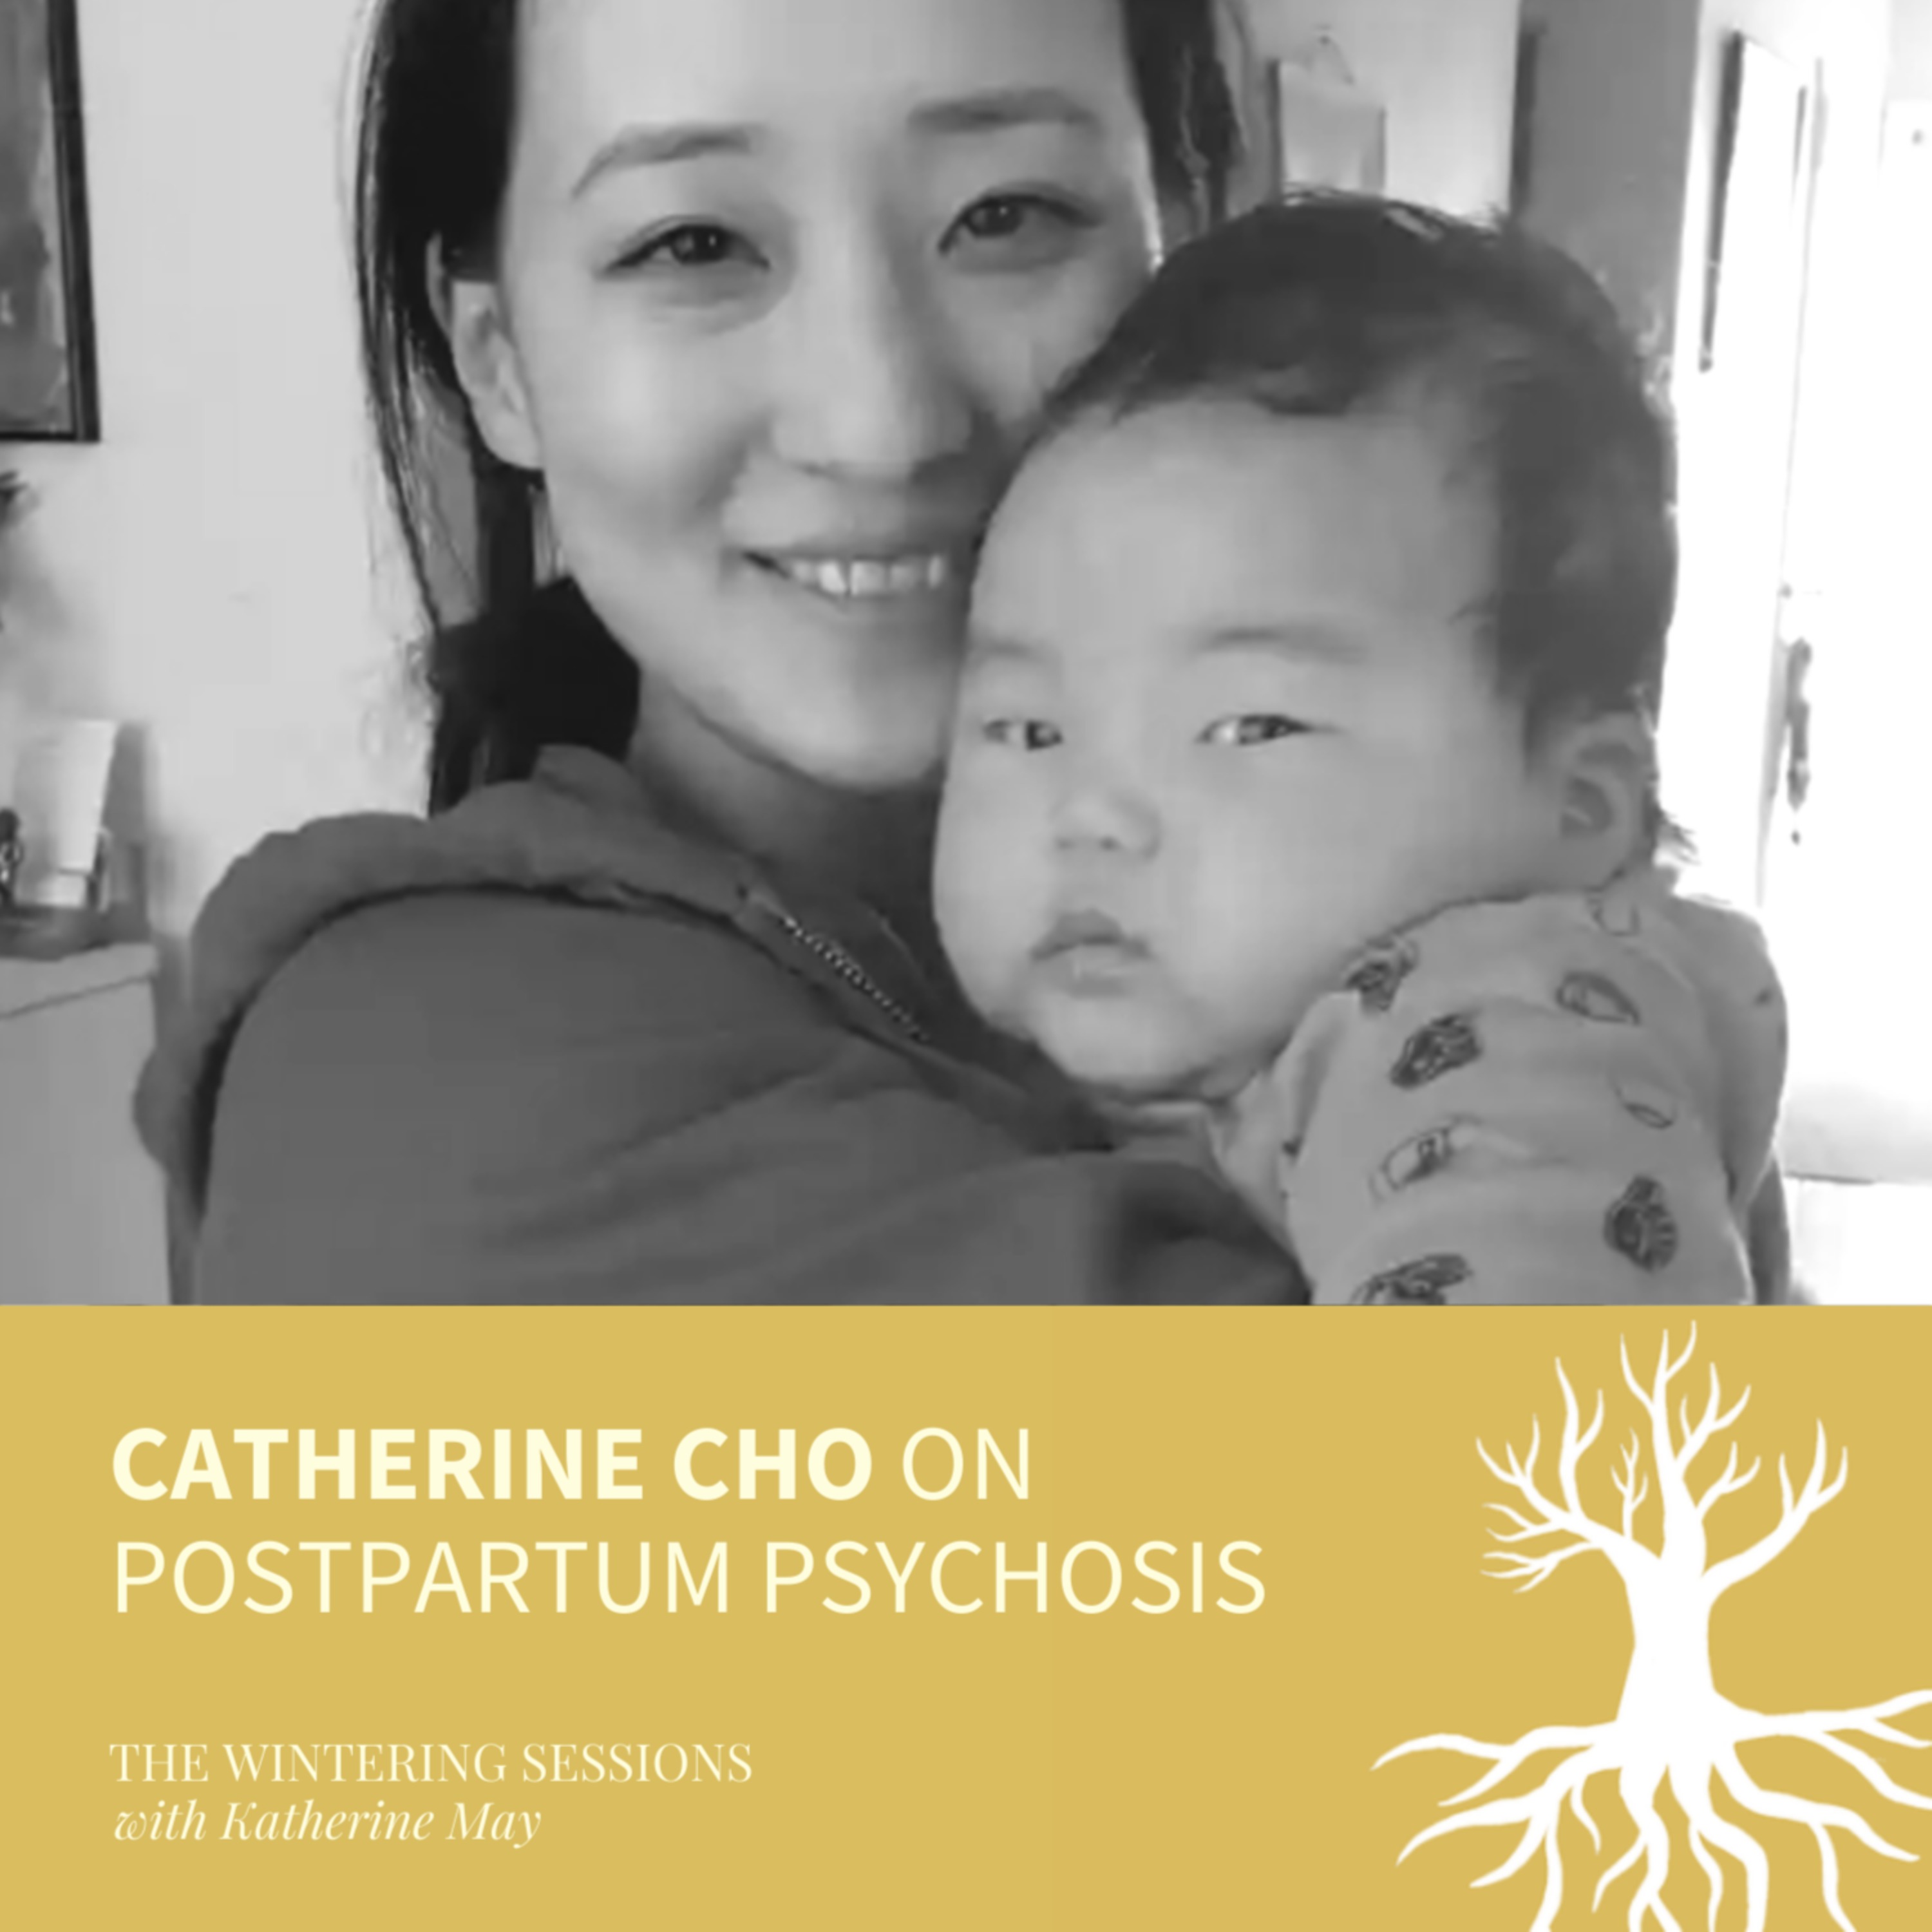 Catherine Cho on postpartum psychosis